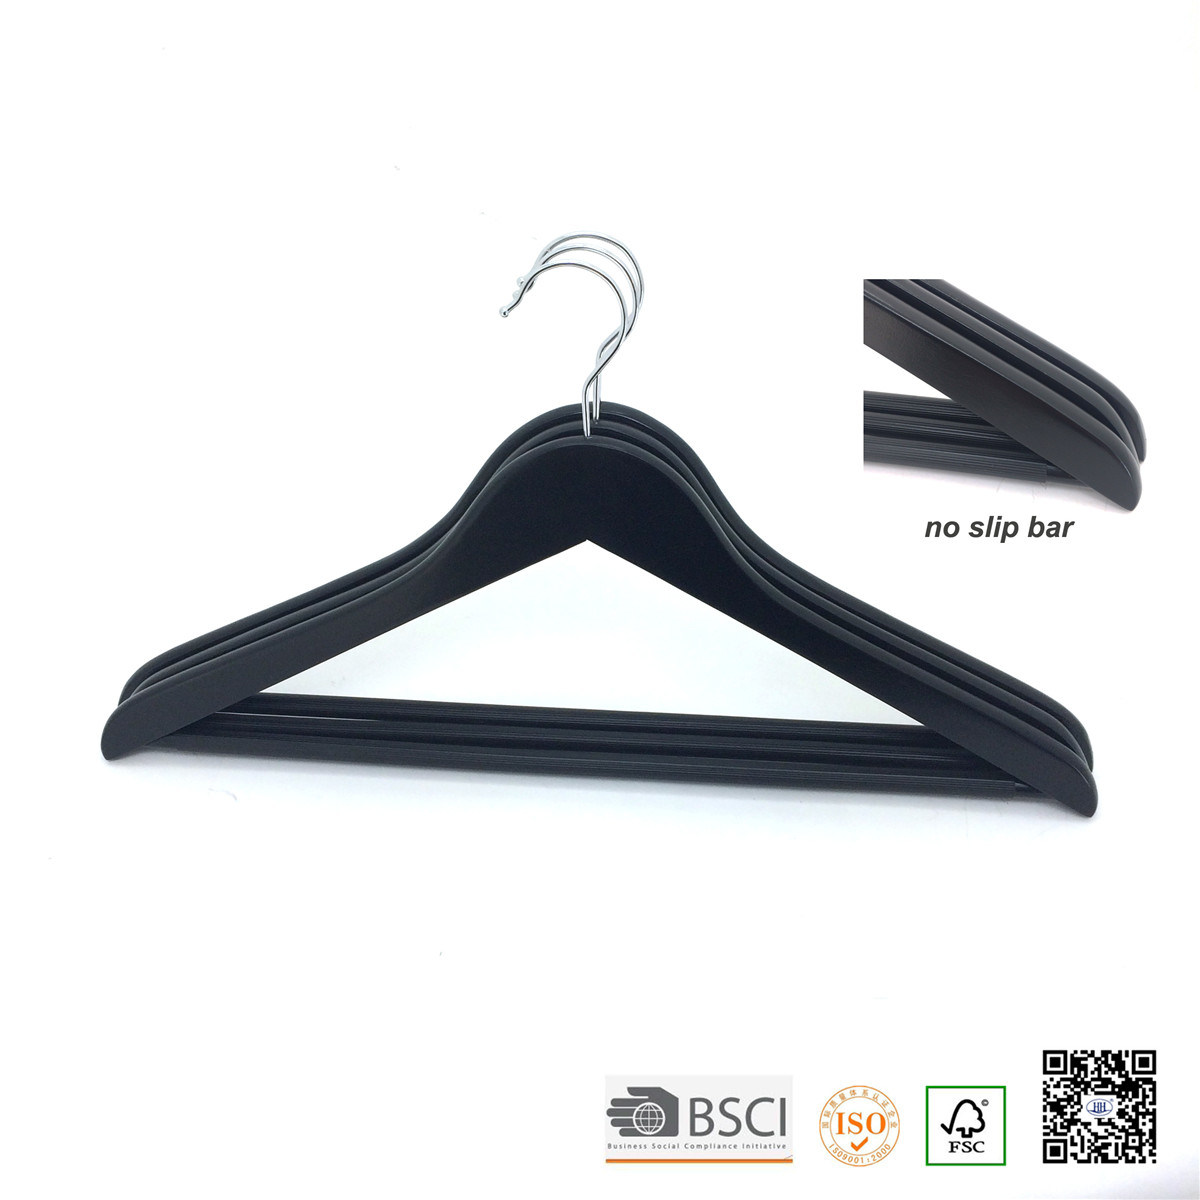 Black Non Slip Bar Wooden Clothes Hanger Hangers for Jeans